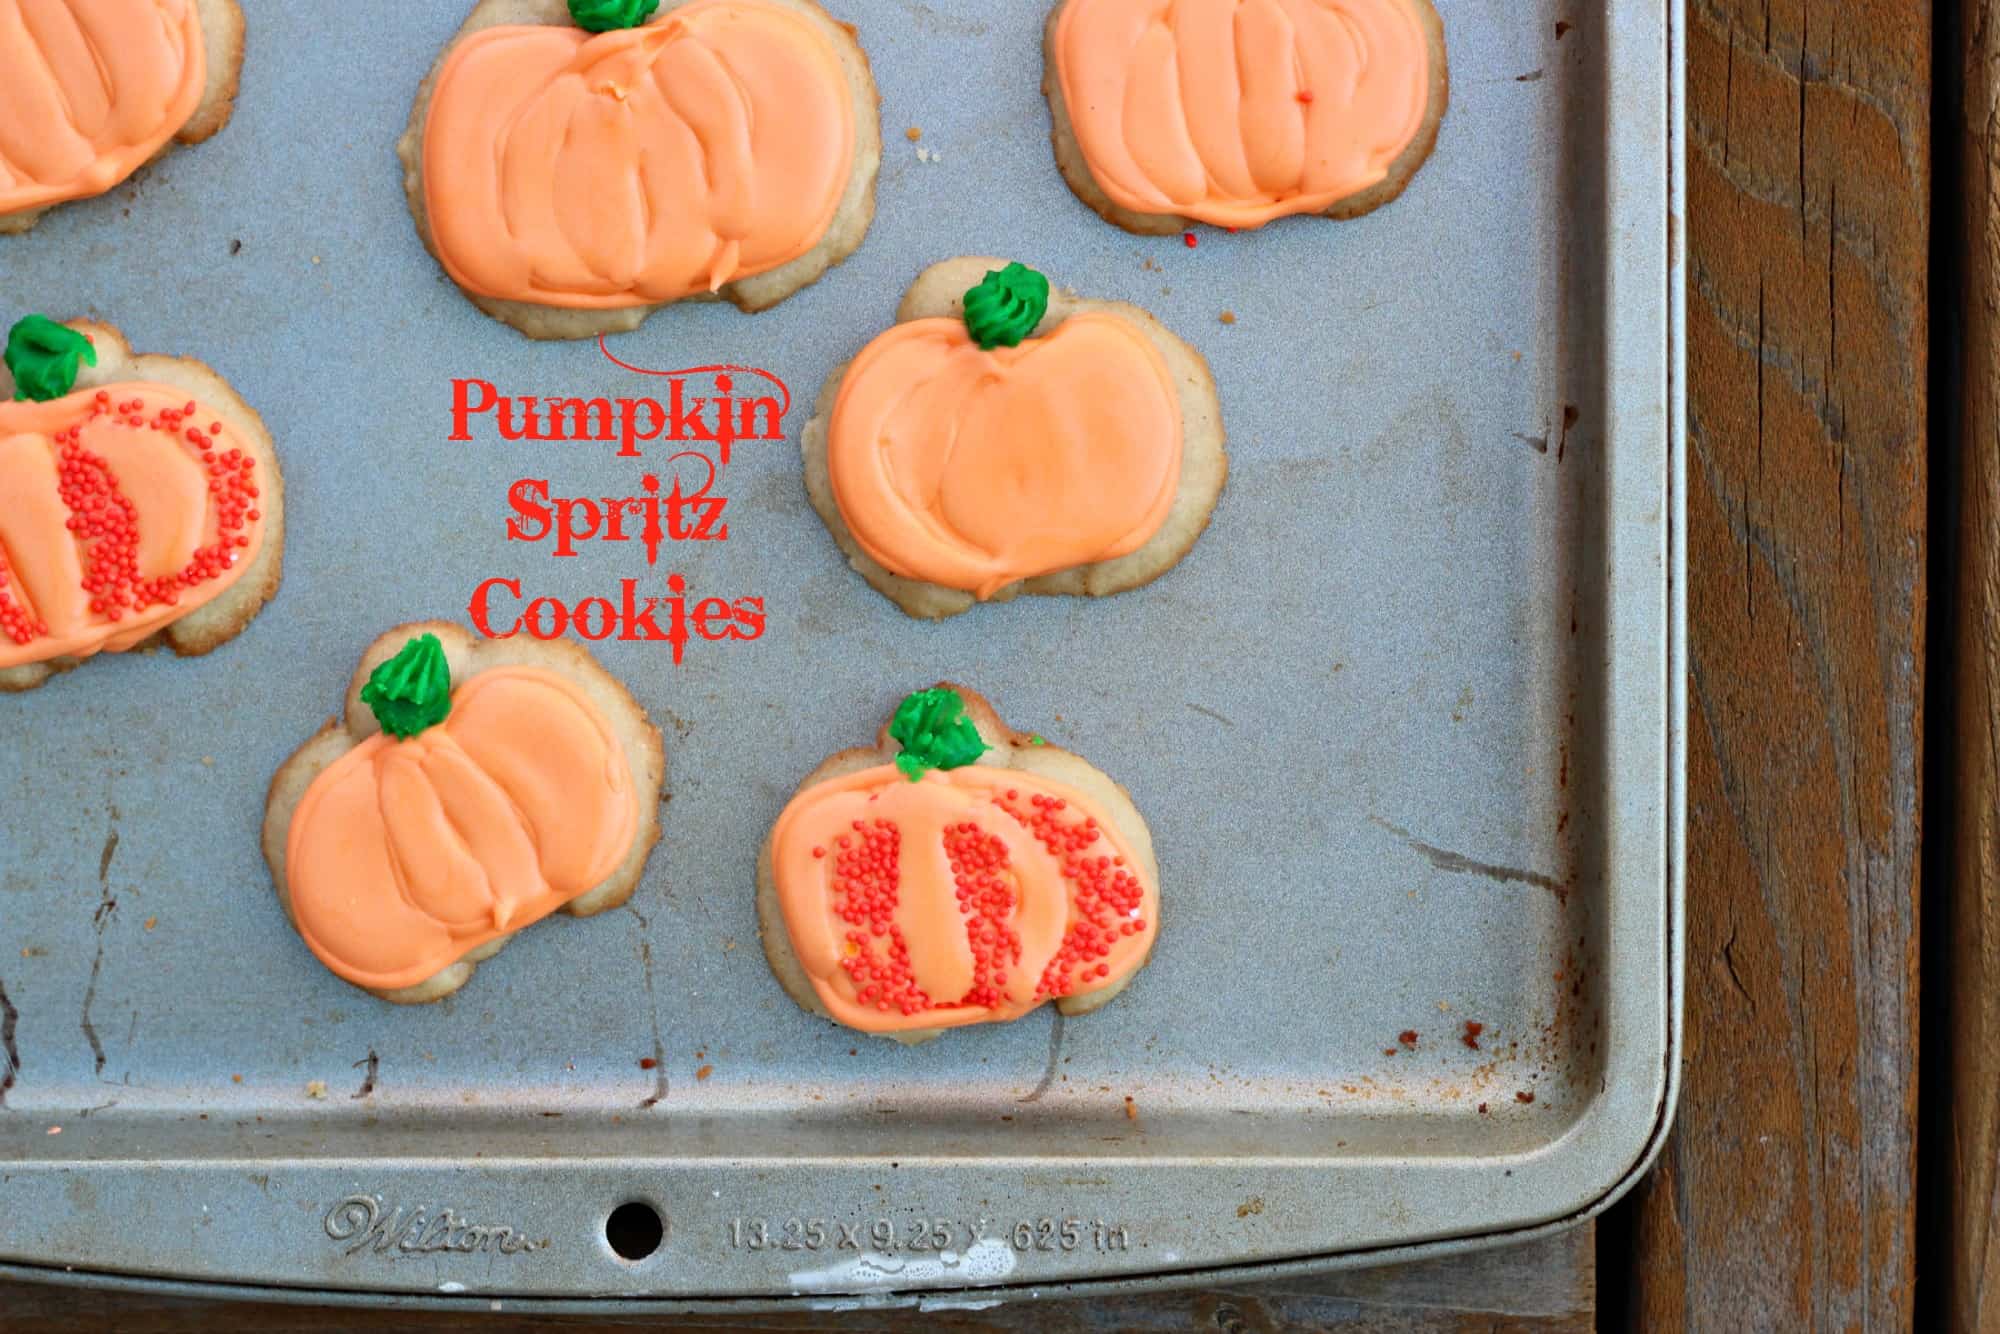 Pumpkin spritz cookies on a metal baking tray